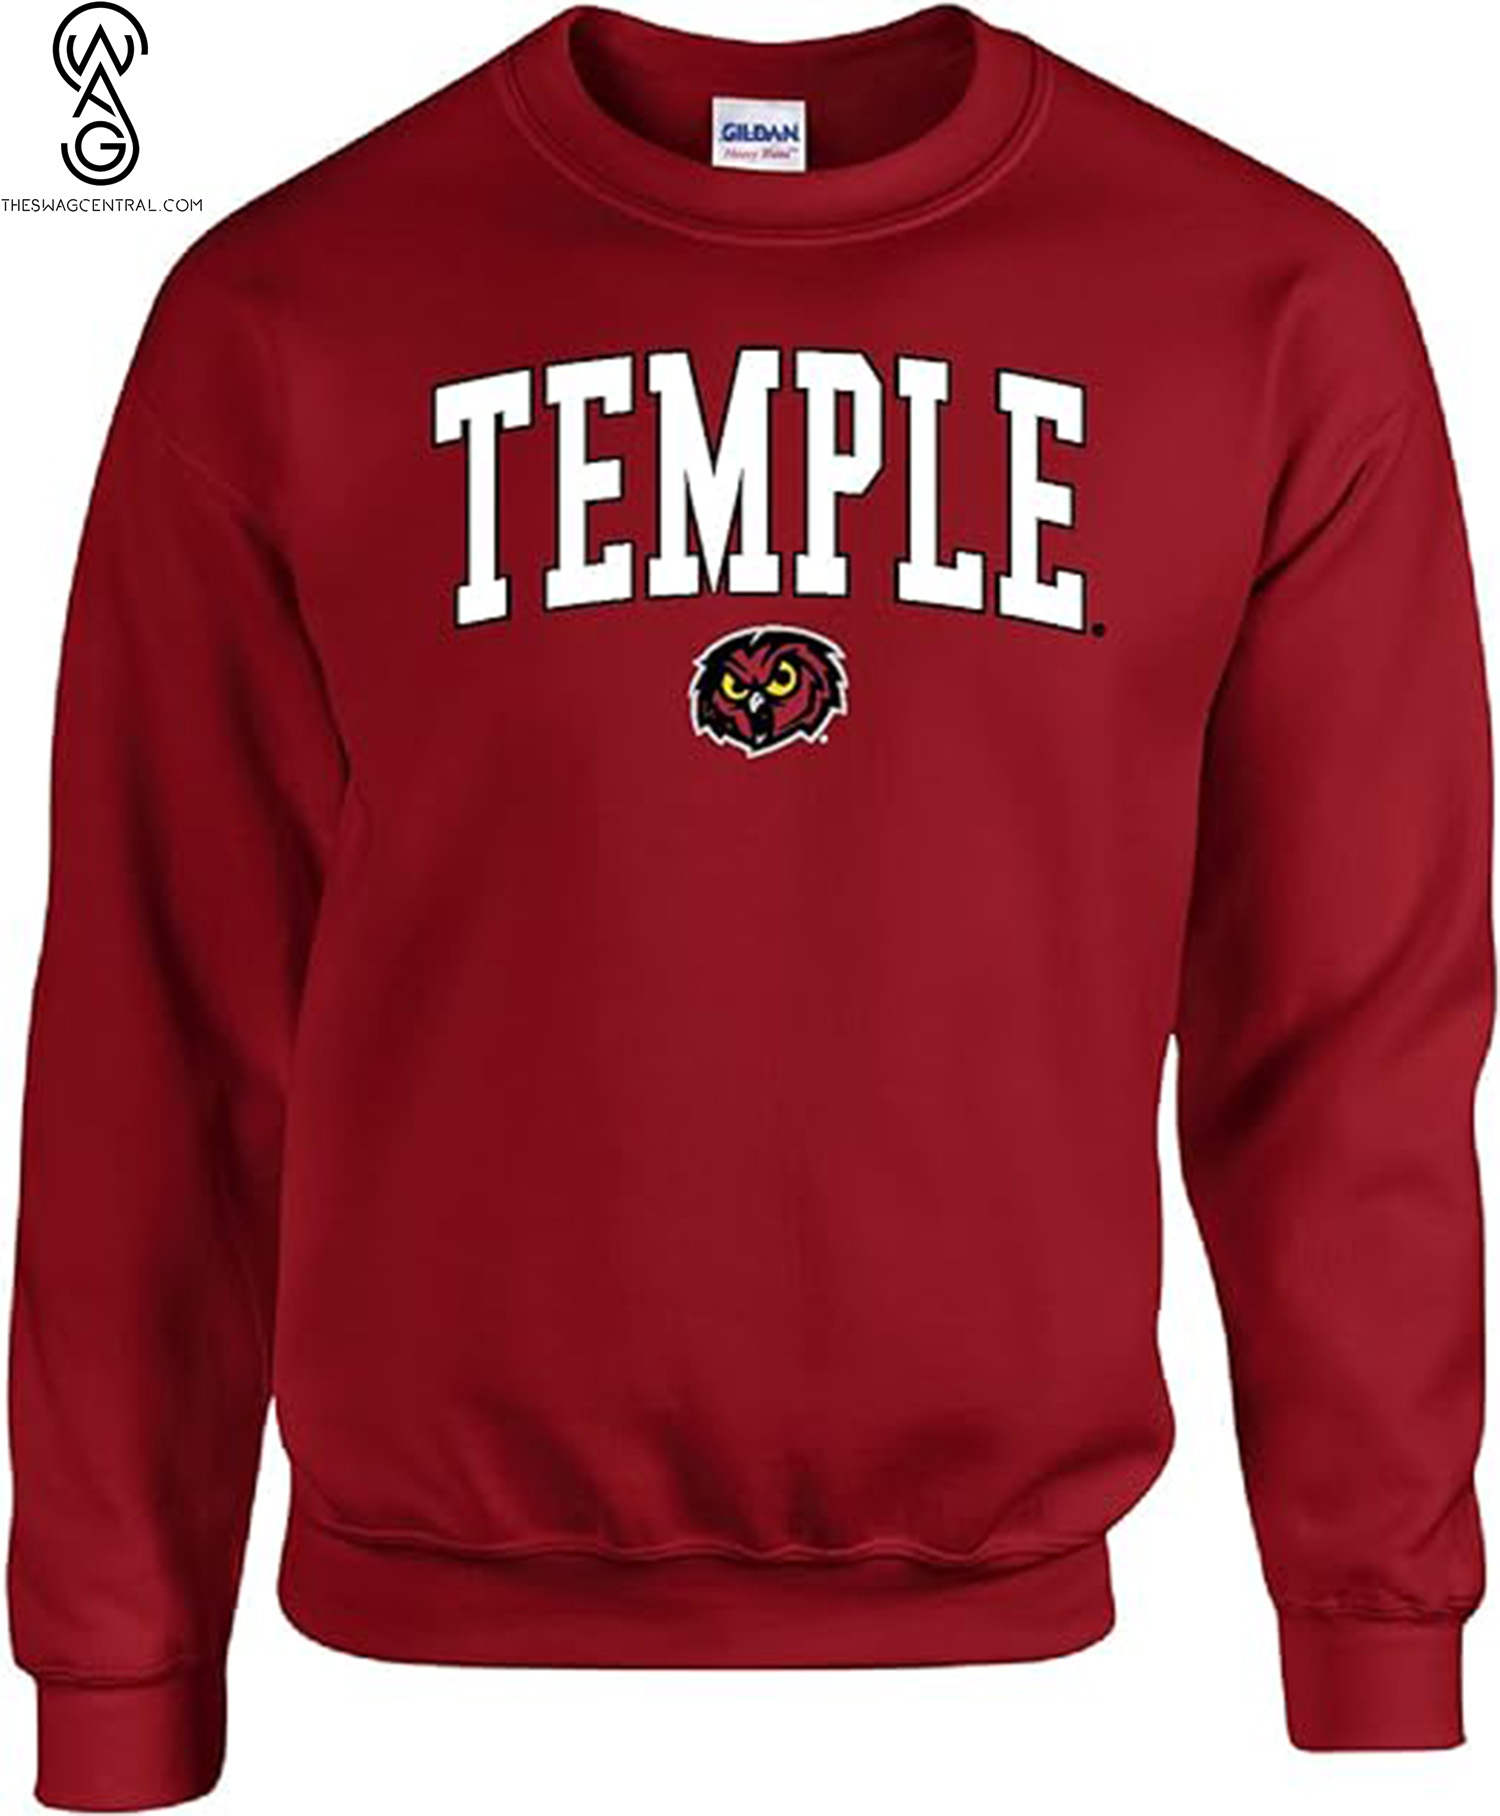 Temple University Owls Jumbo Arch Crewneck Sweatshirt